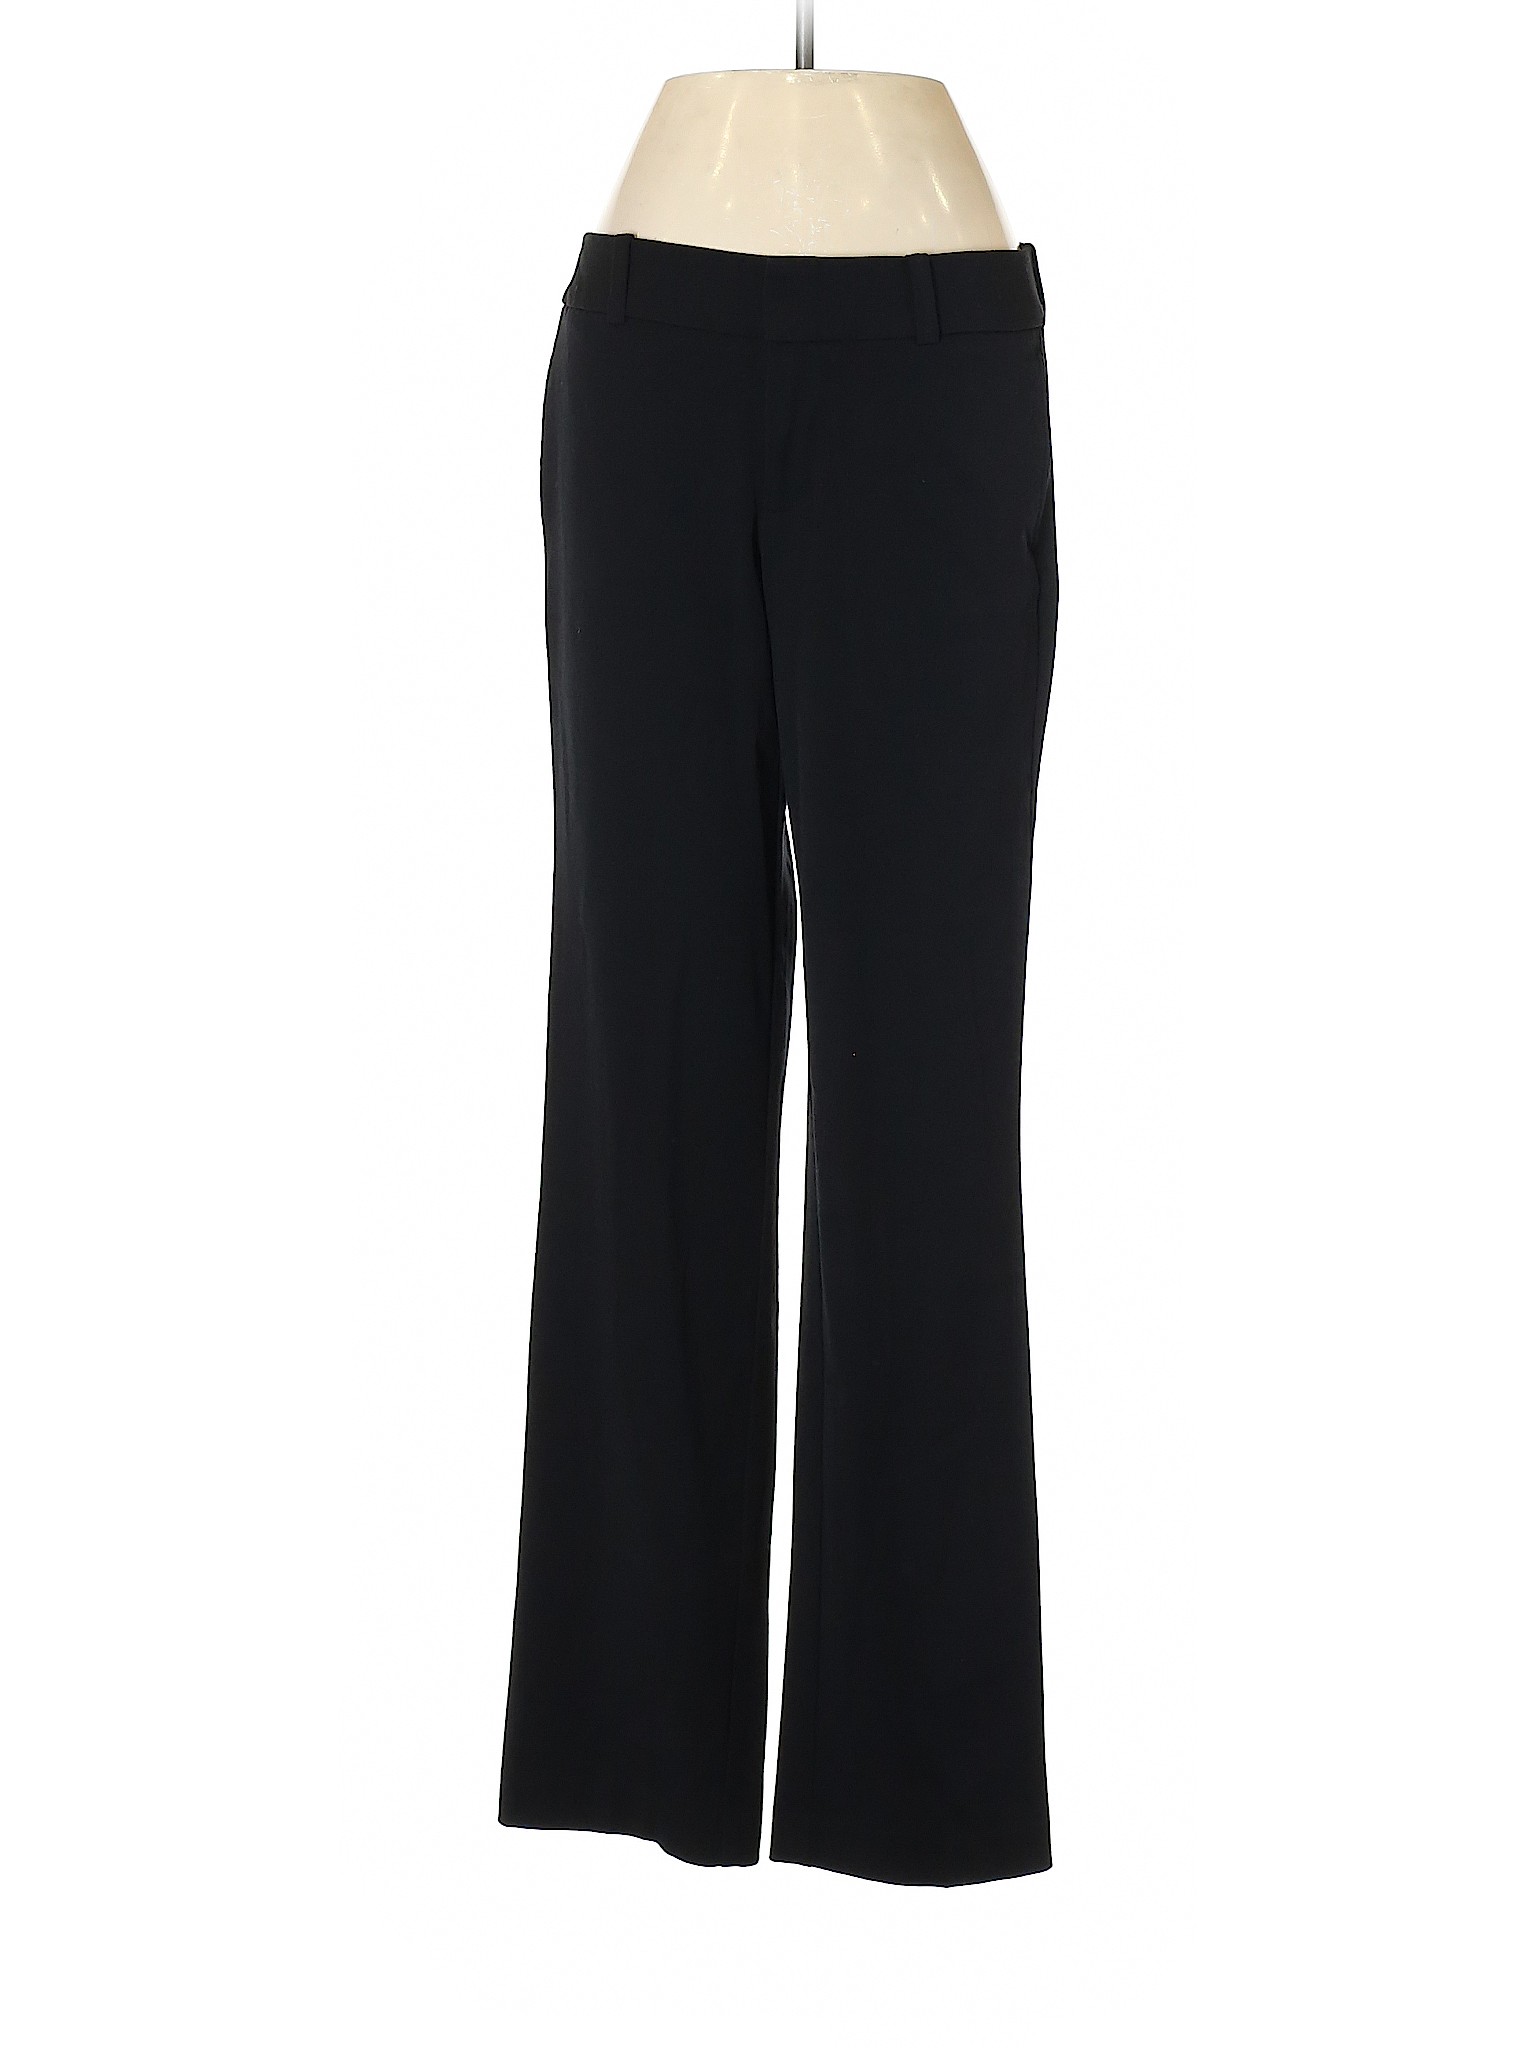 Merona Women Black Dress Pants 2 | eBay